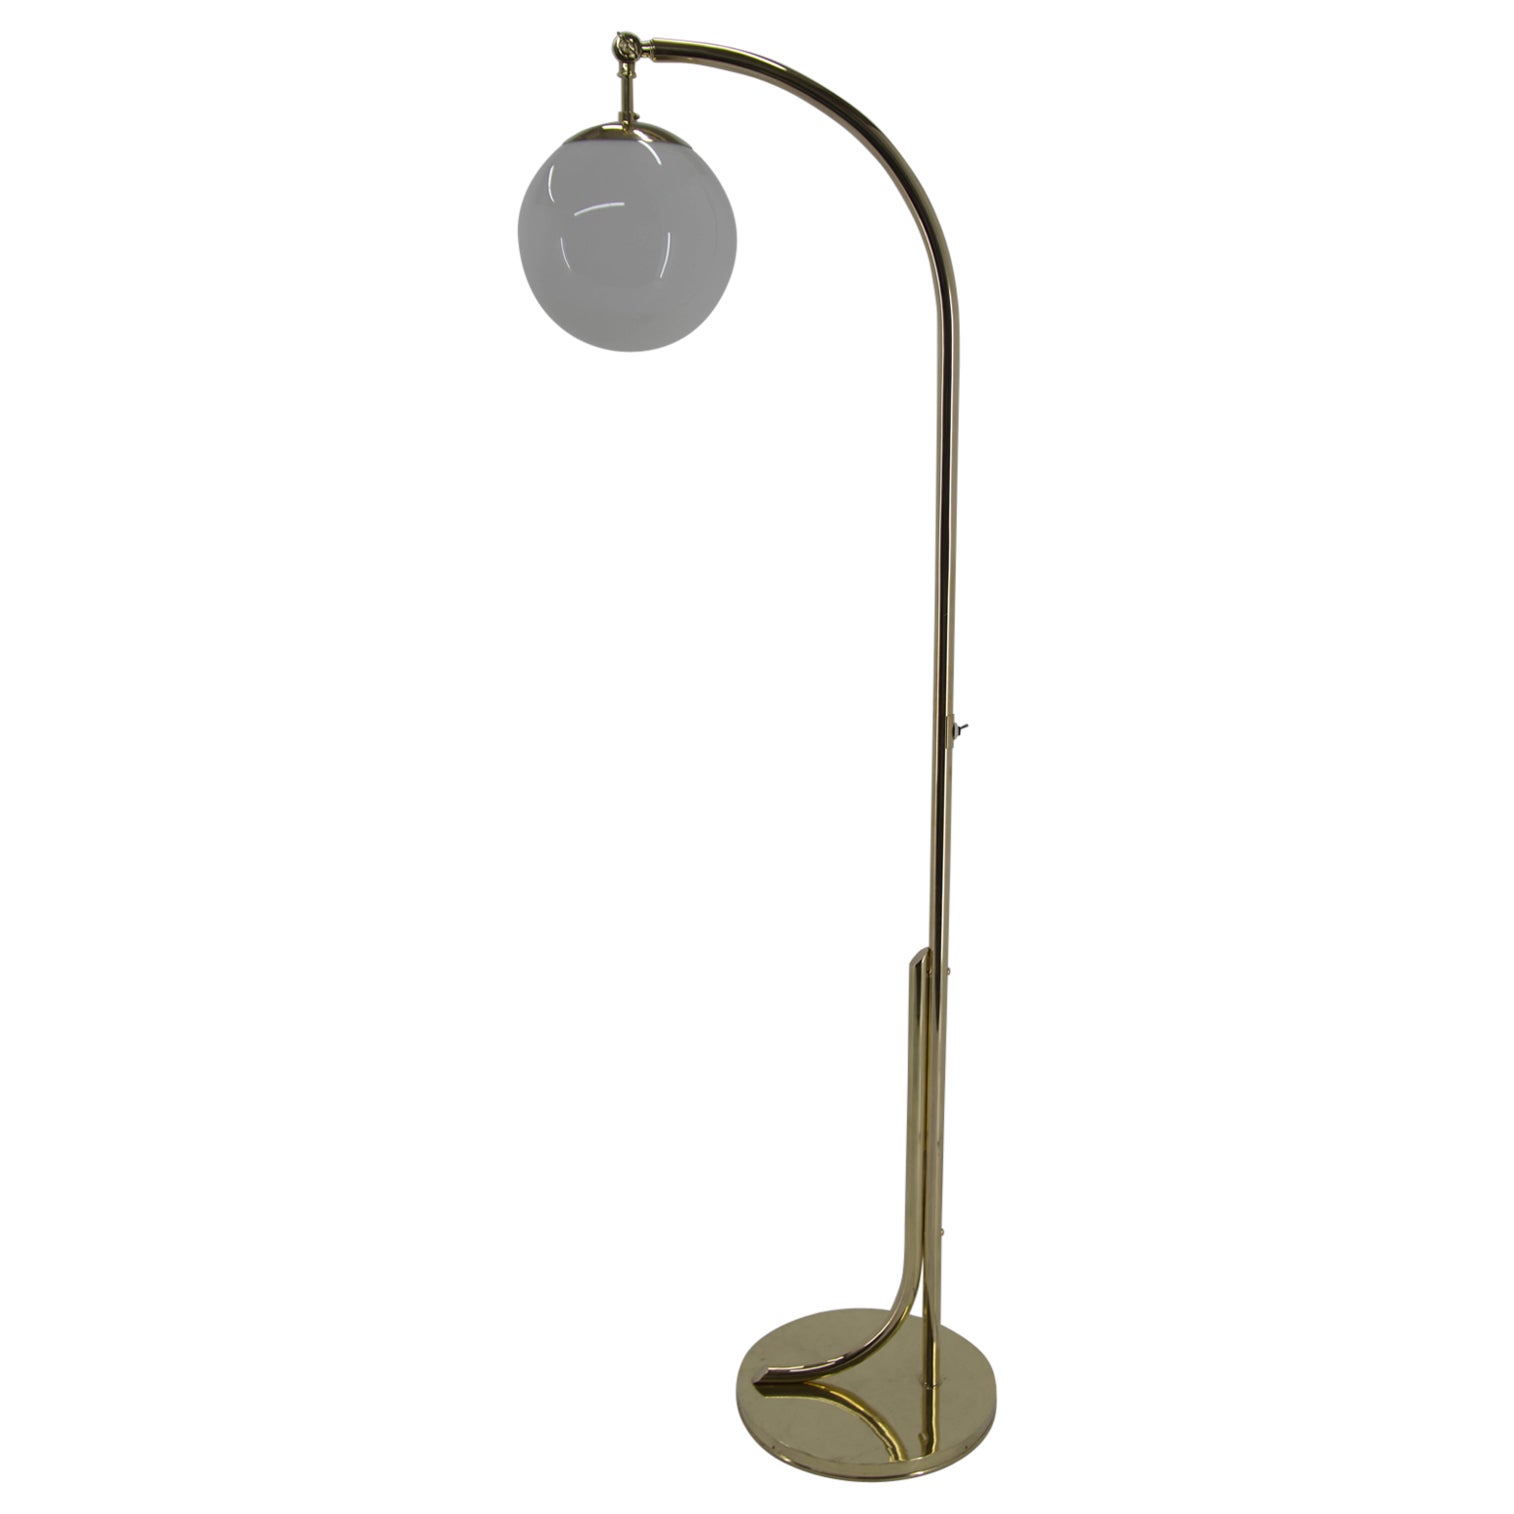 Rare Ar Deco / Functionalist Brass Floor Lamp, 1930s, Restored For Sale